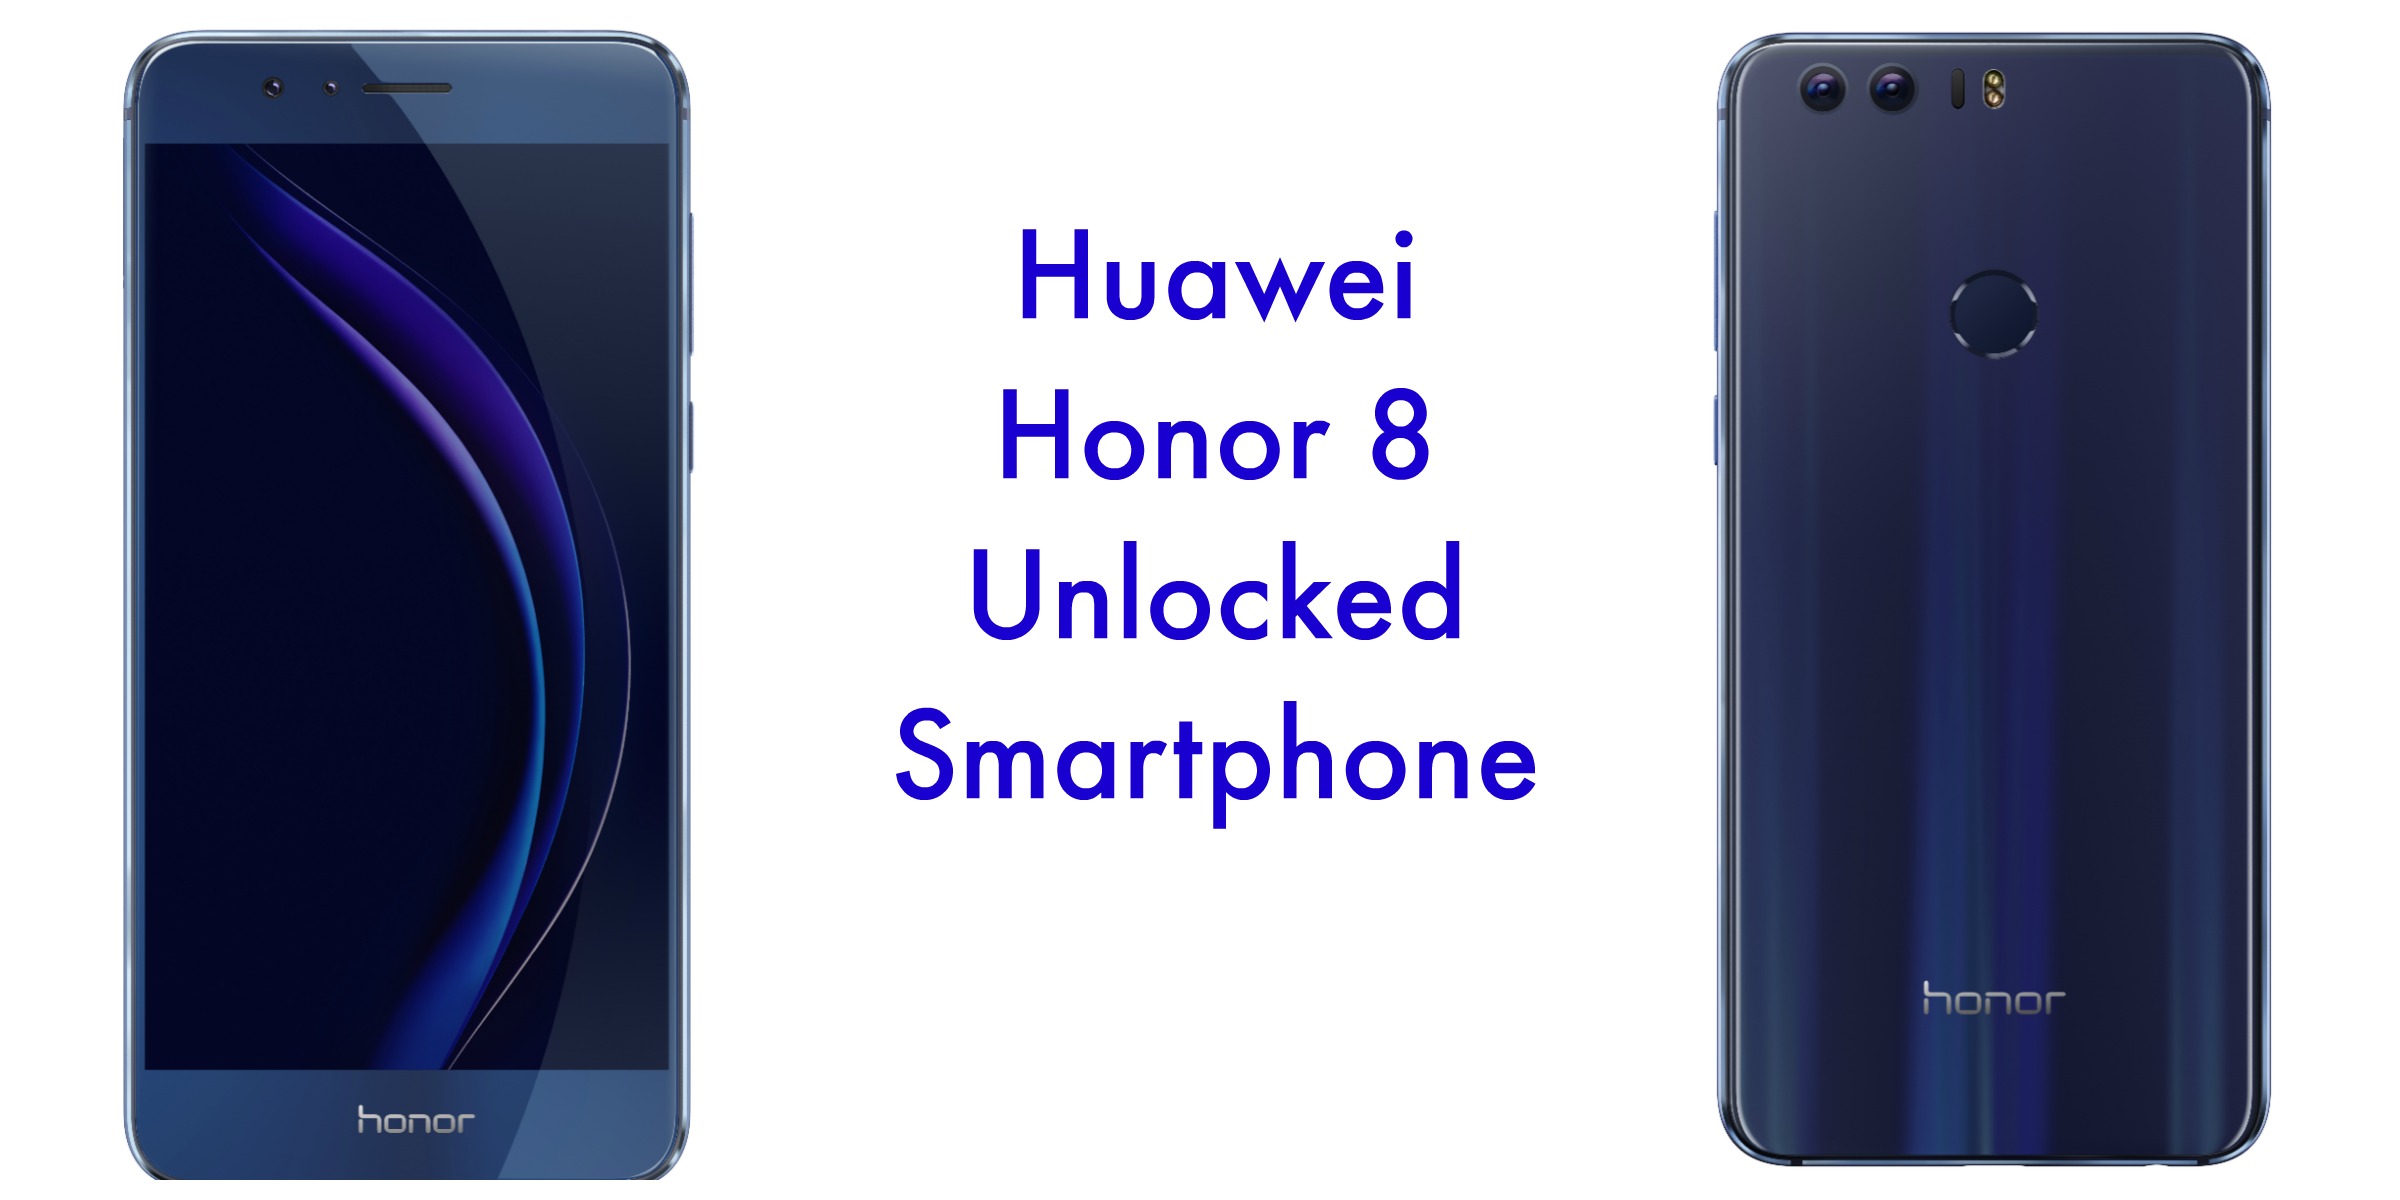 The Huawei Honor 8 Unlocked Smartphone Offers You Freedom ... - 2400 x 1200 jpeg 201kB